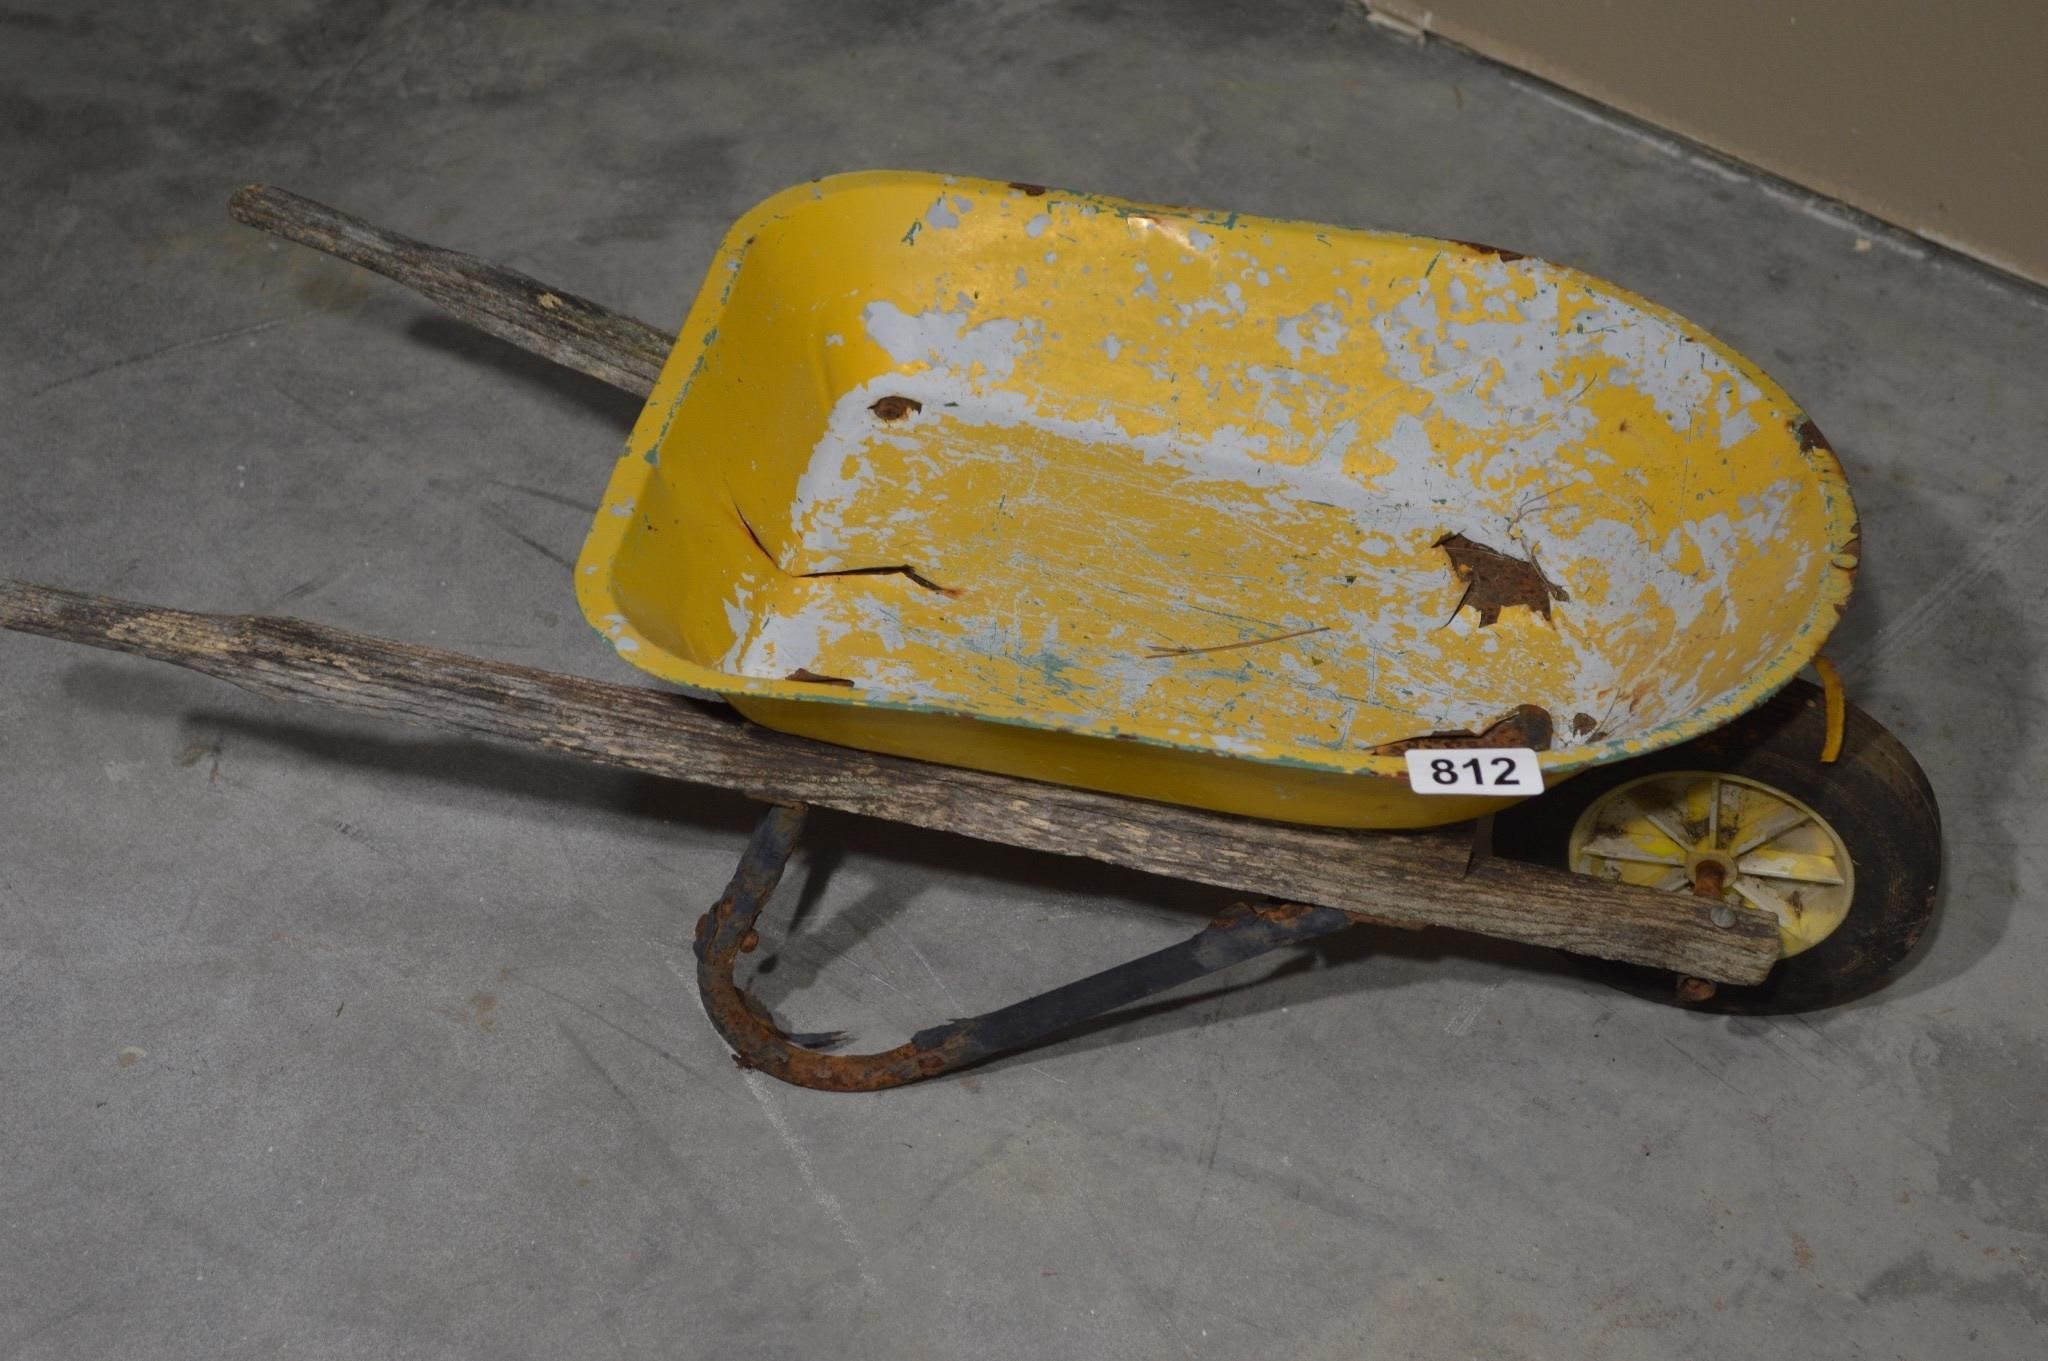 Child's sized yellow wheelbarrow - weathered